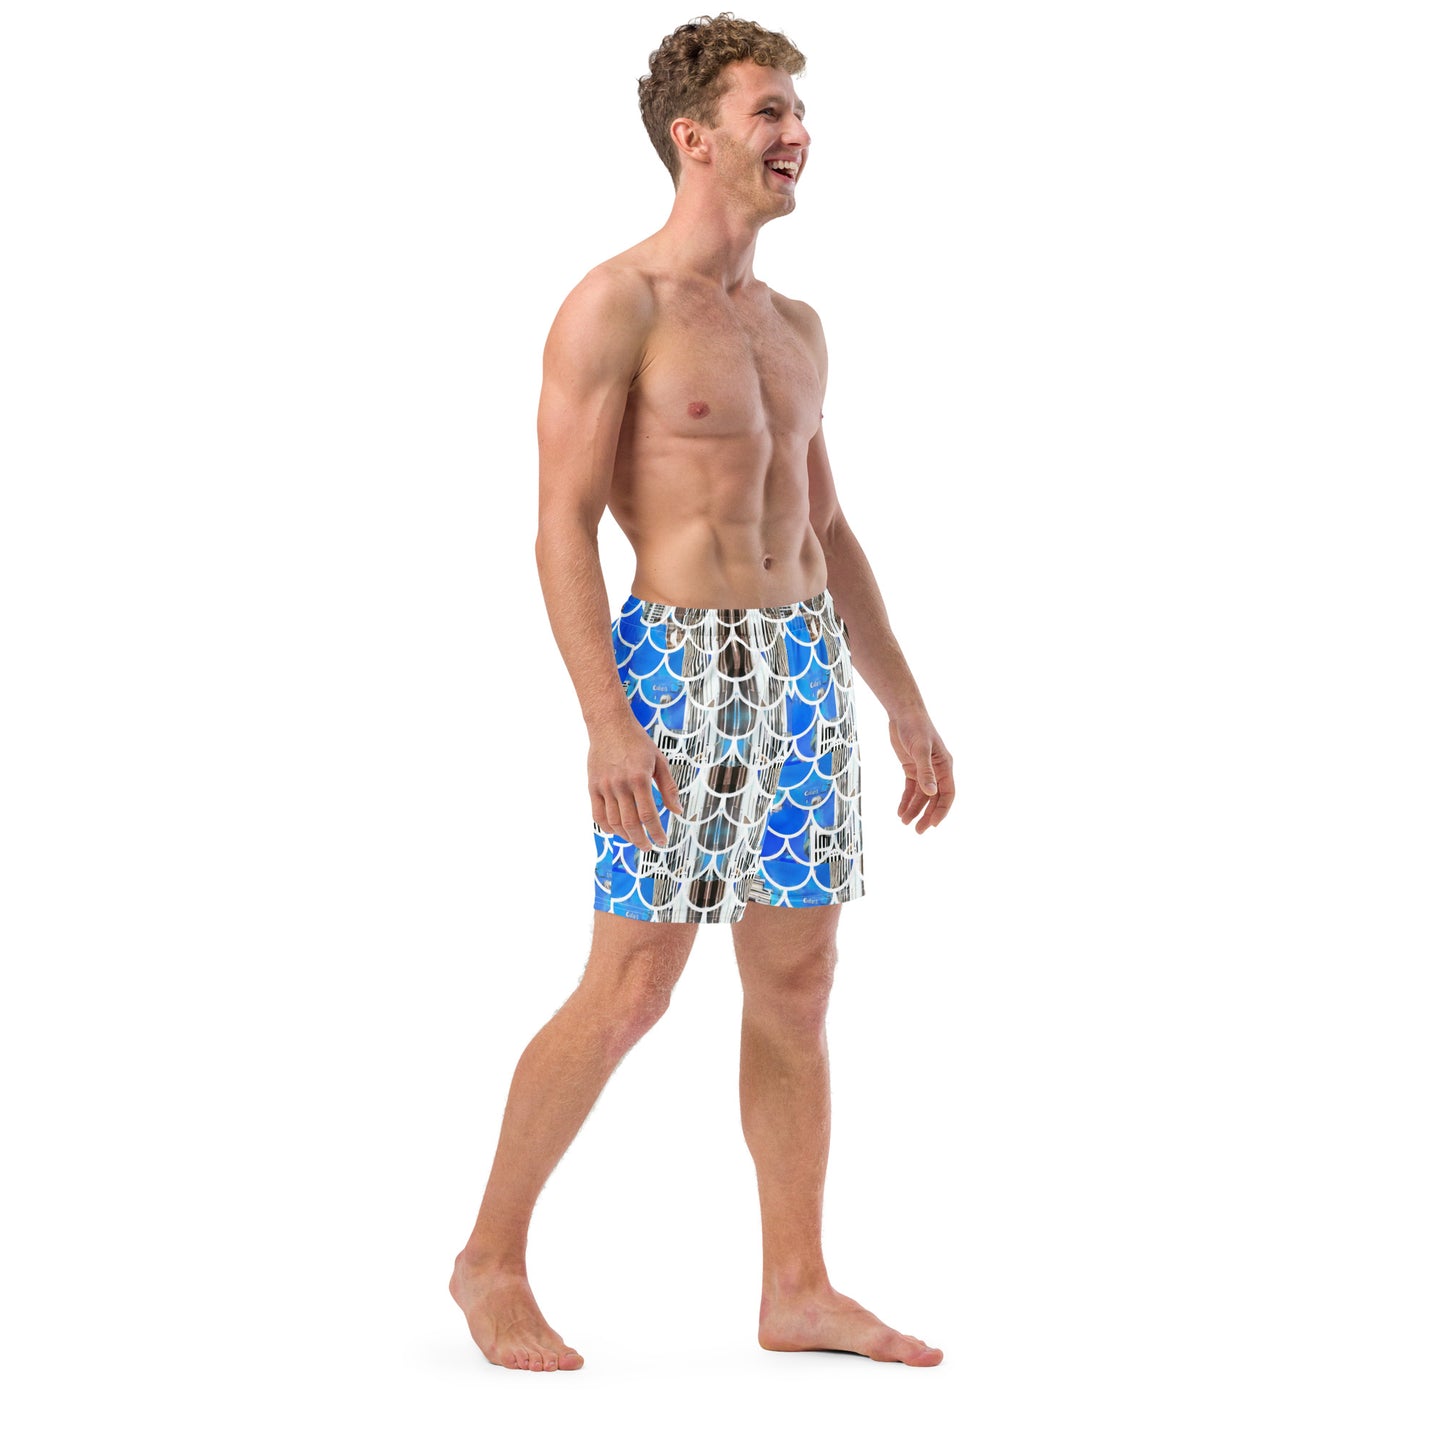 Mermosa Bay Men's swim trunks